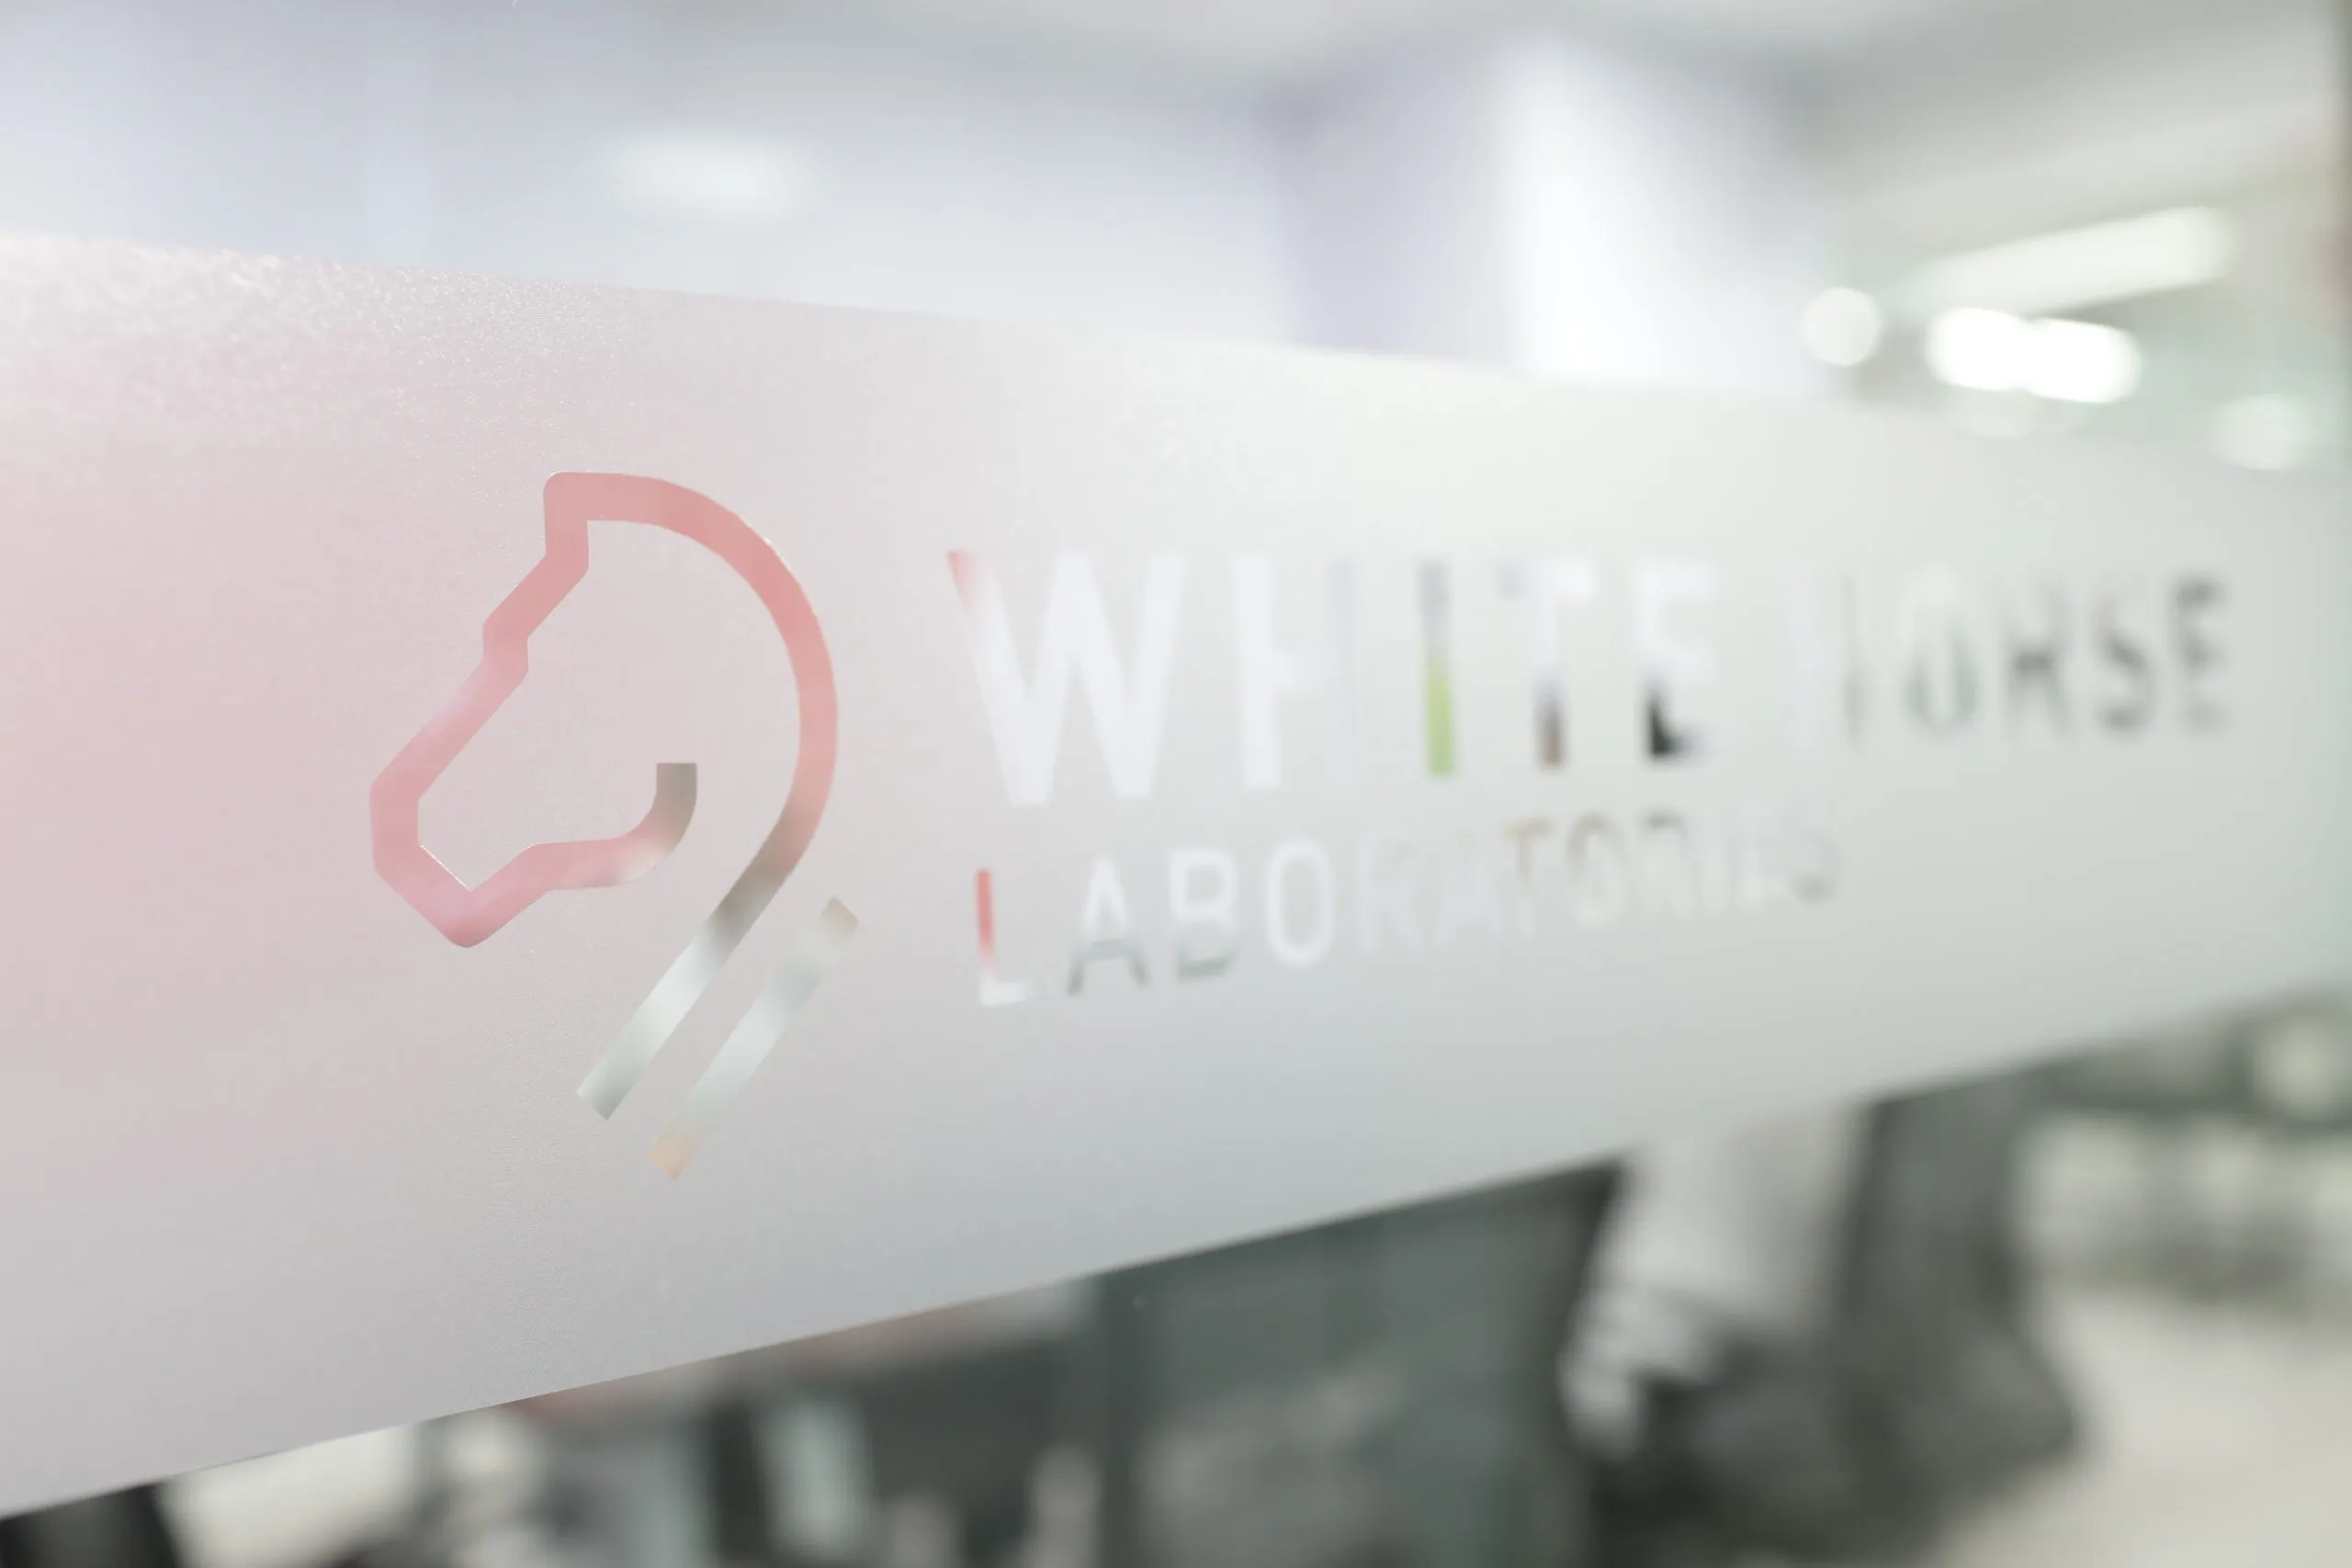 White Horse Laboratories